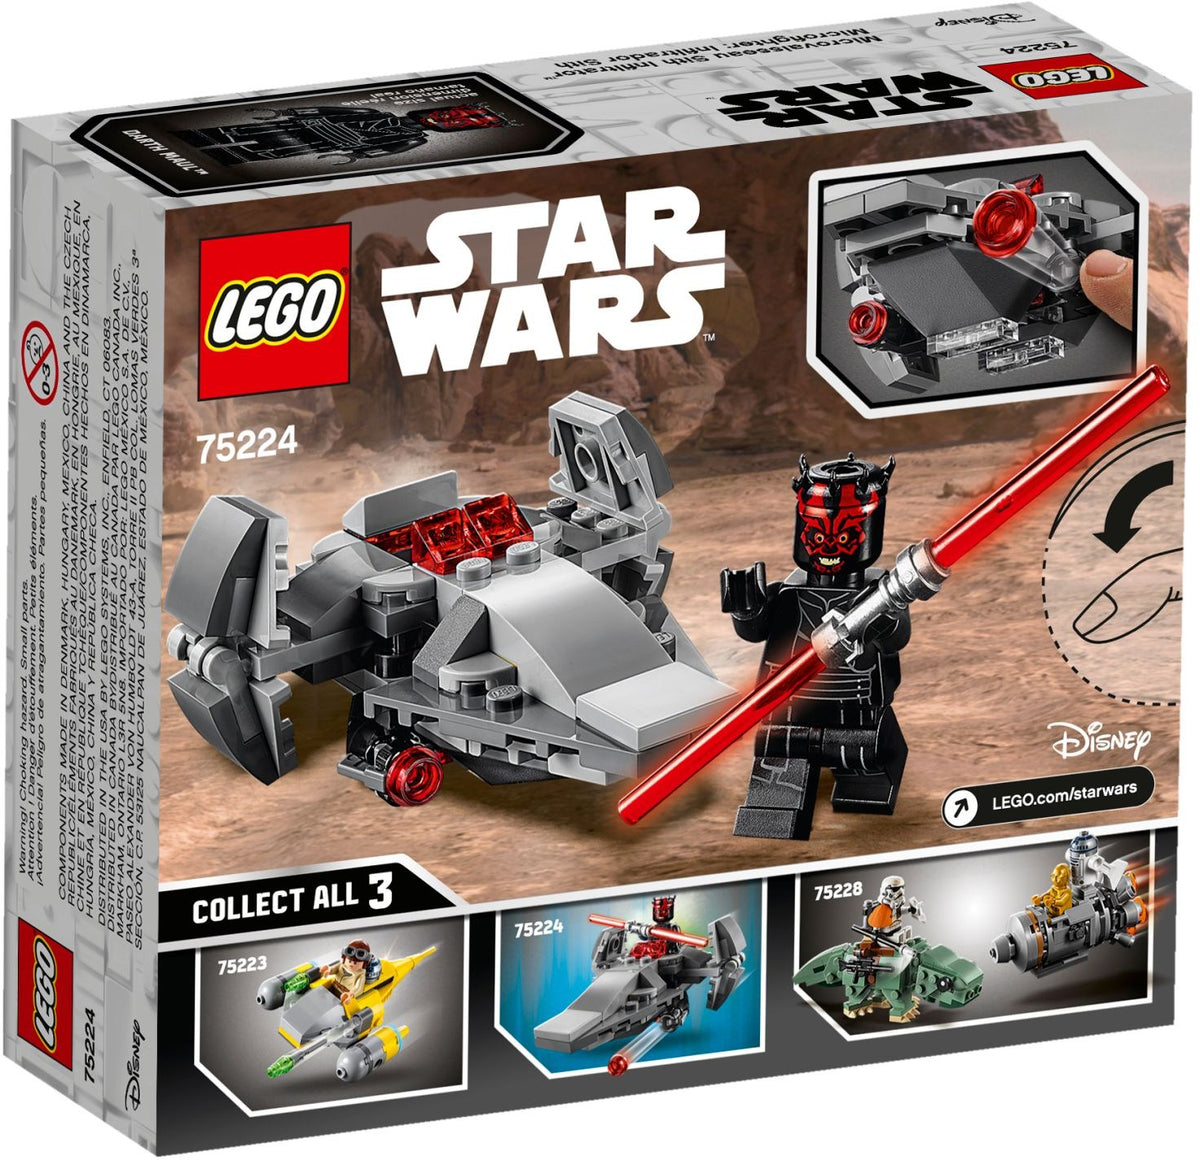 LEGO Star Wars 75224 Sith Infiltrator